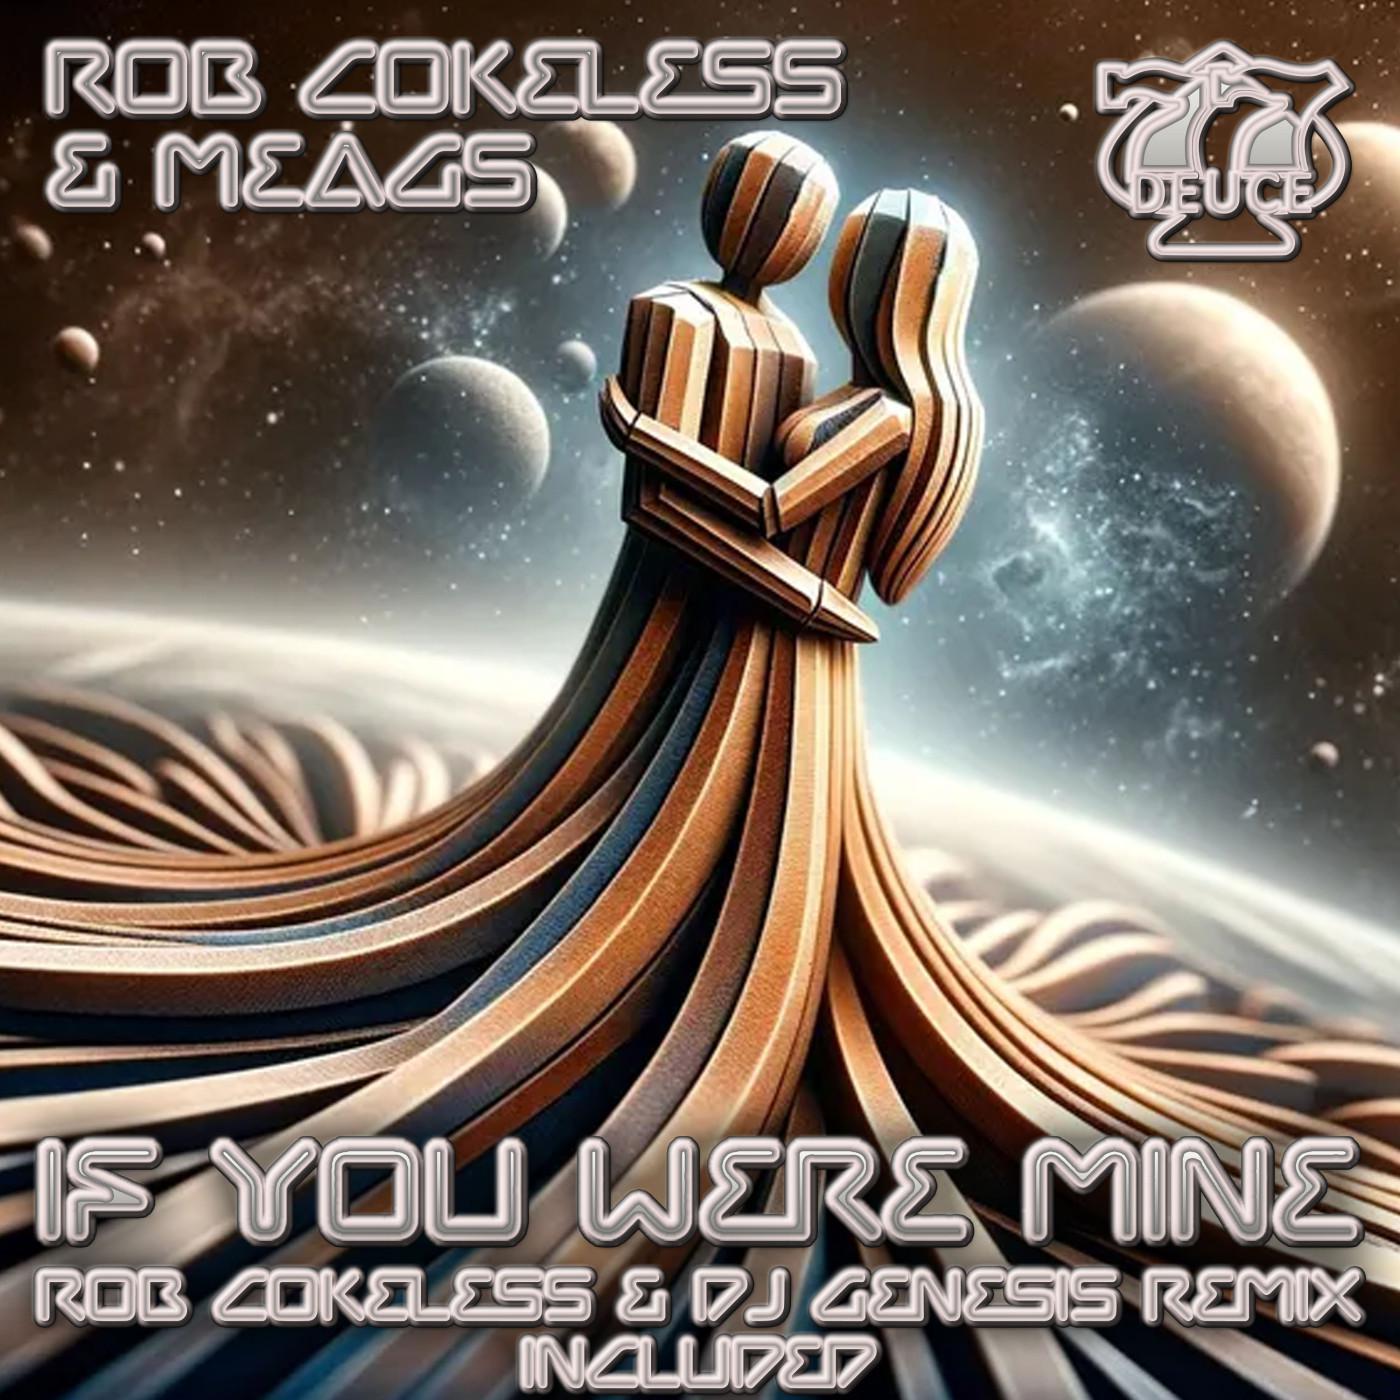 Rob Cokeless - If You Were Mine (Original Mix)